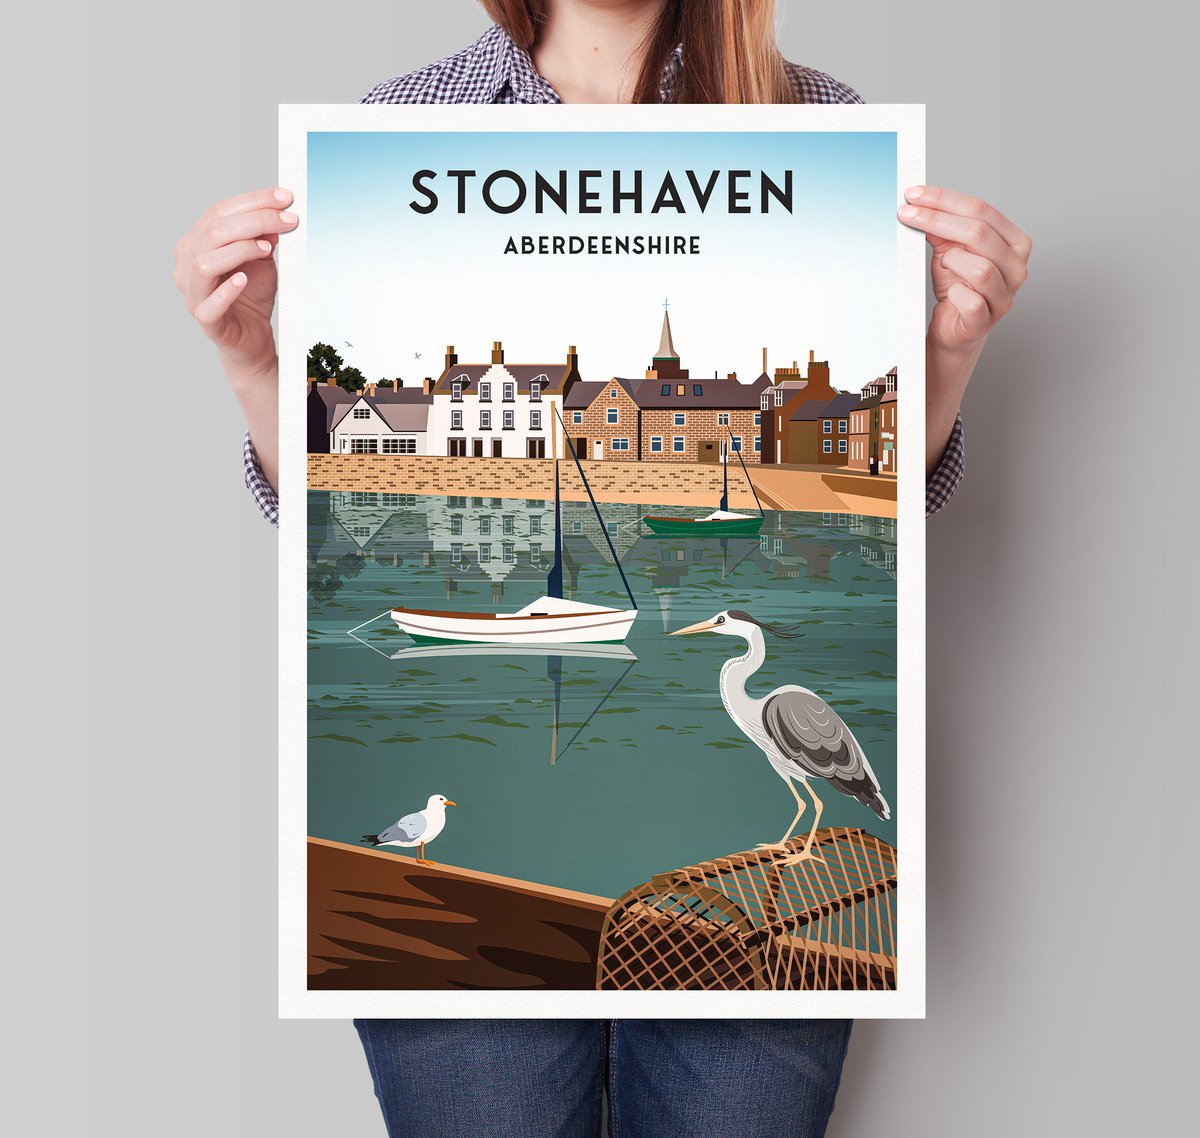 Stonehaven Harbour Print - Aberdeenshire Travel Poster etsy.me/3IBH3AD #aberdeenshire #stonehavendock #dunnottarcastle #travelposter #stonehavenprint #stonehaven #stonehavenart #aberdeen #wallart #scotland #visitstonehaven